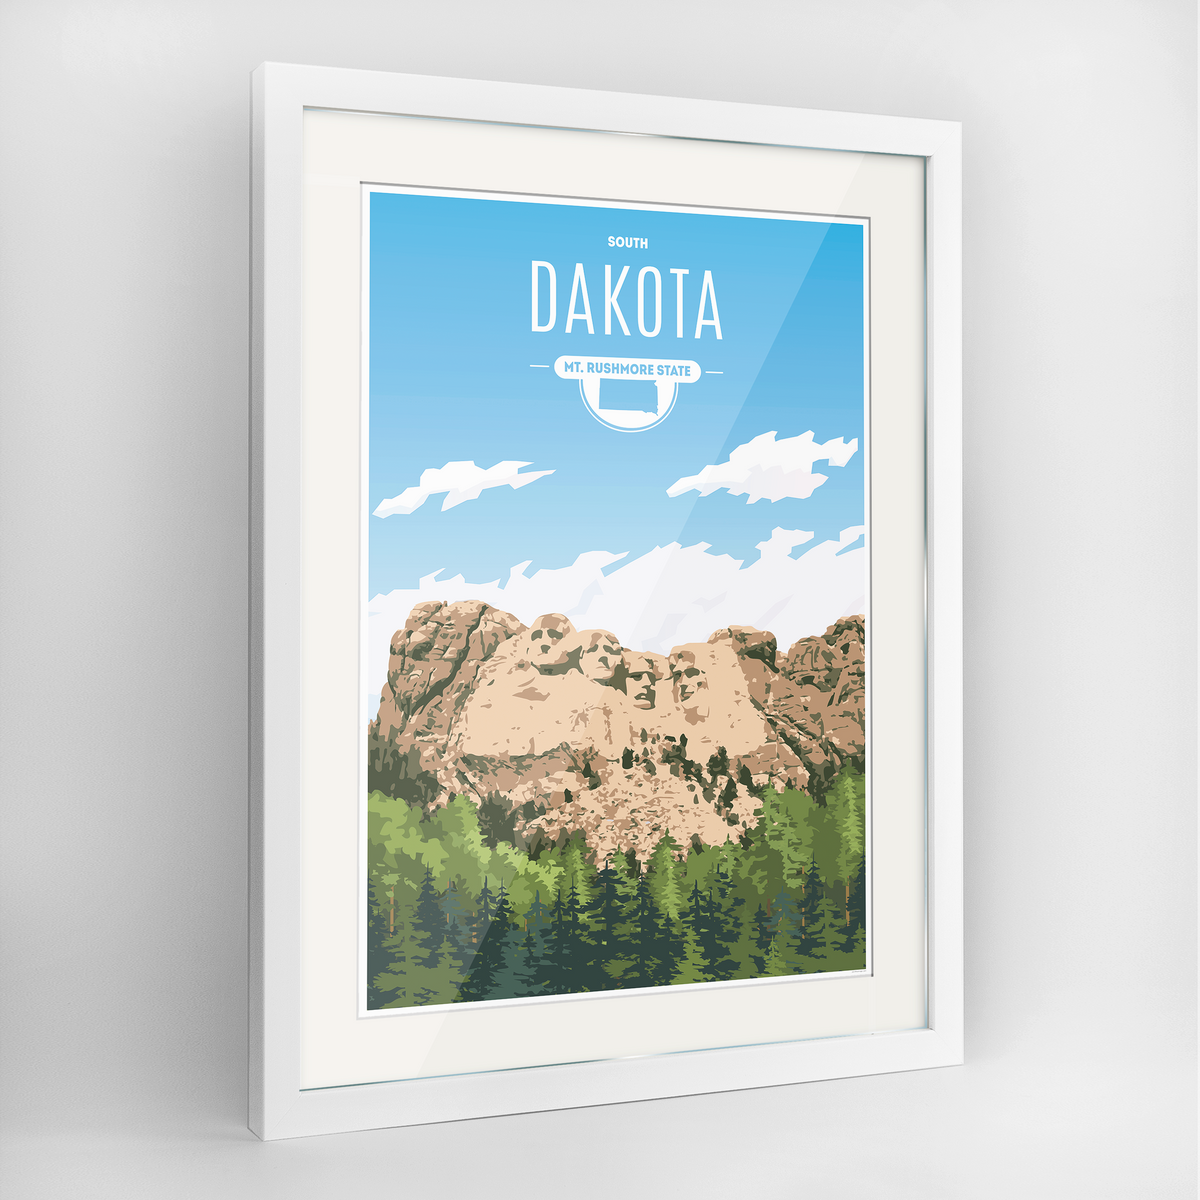 South Dakota State Frame Print